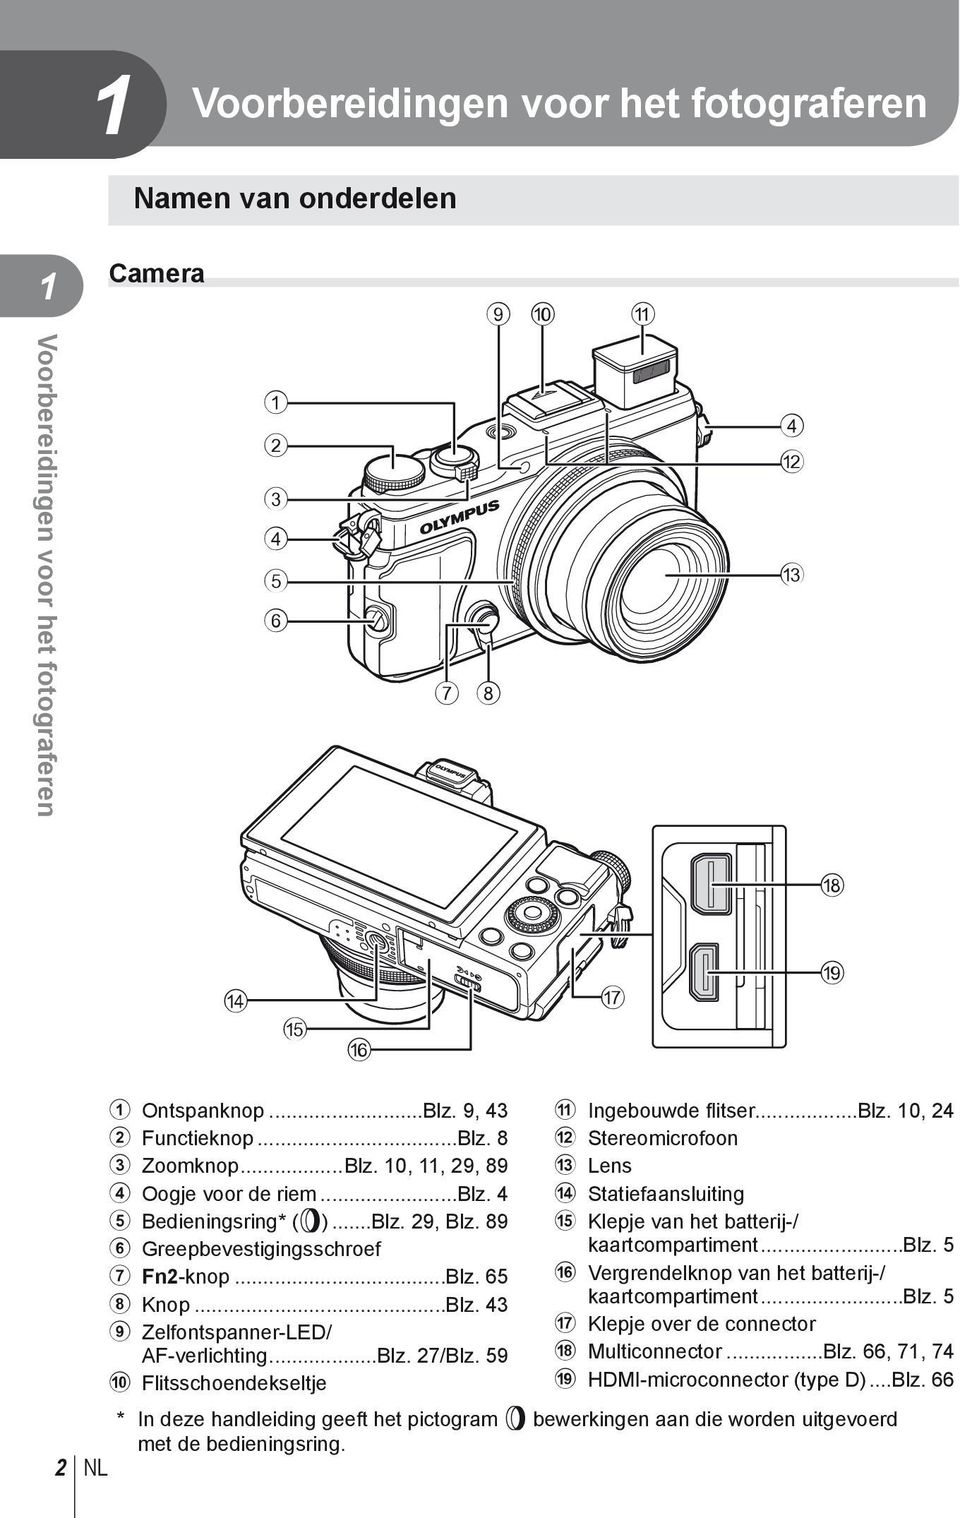 59 0 Flitsschoendekseltje a Ingebouwde fl itser...blz. 10, 24 b Stereomicrofoon c Lens d Statiefaansluiting e Klepje van het batterij-/ kaartcompartiment...blz. 5 f Vergrendelknop van het batterij-/ kaartcompartiment.